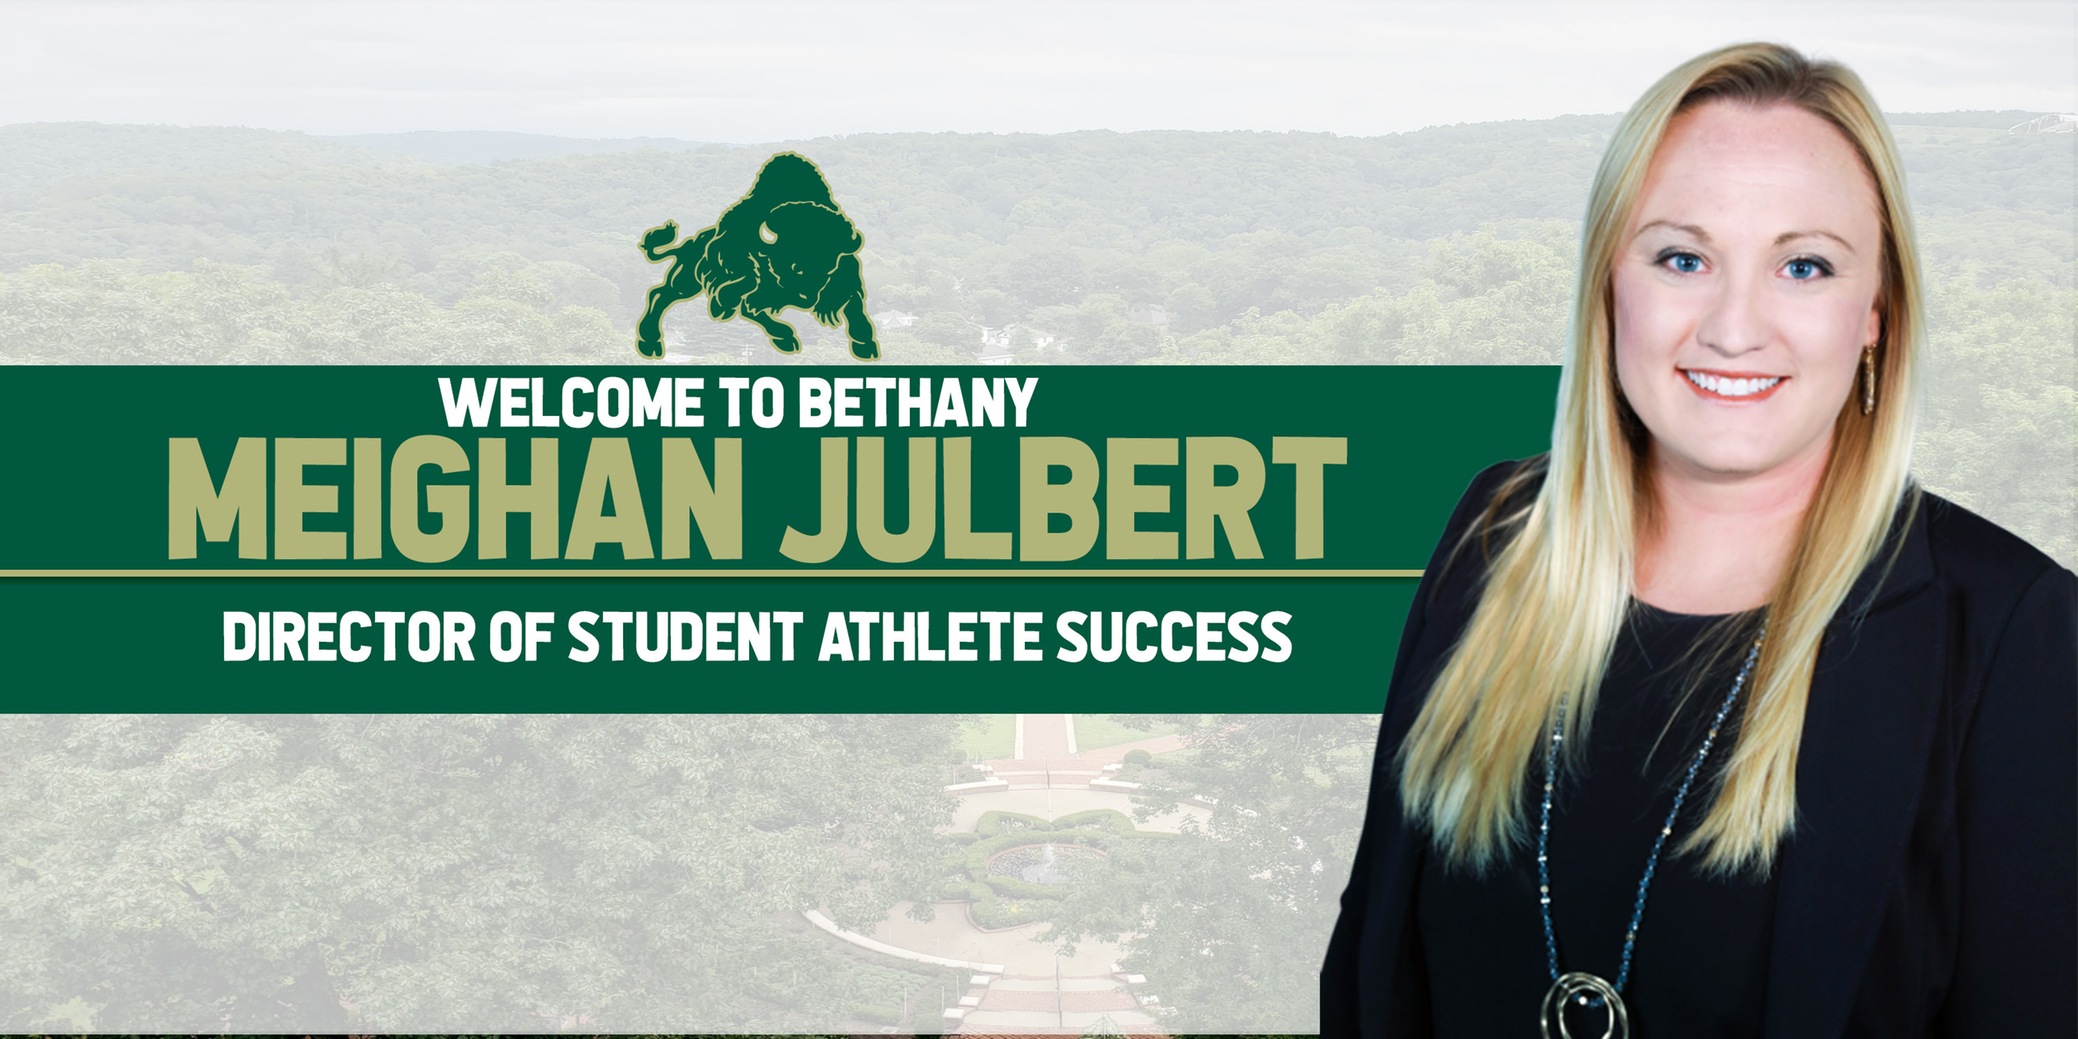 Julbert Named Director of Student Athlete Success